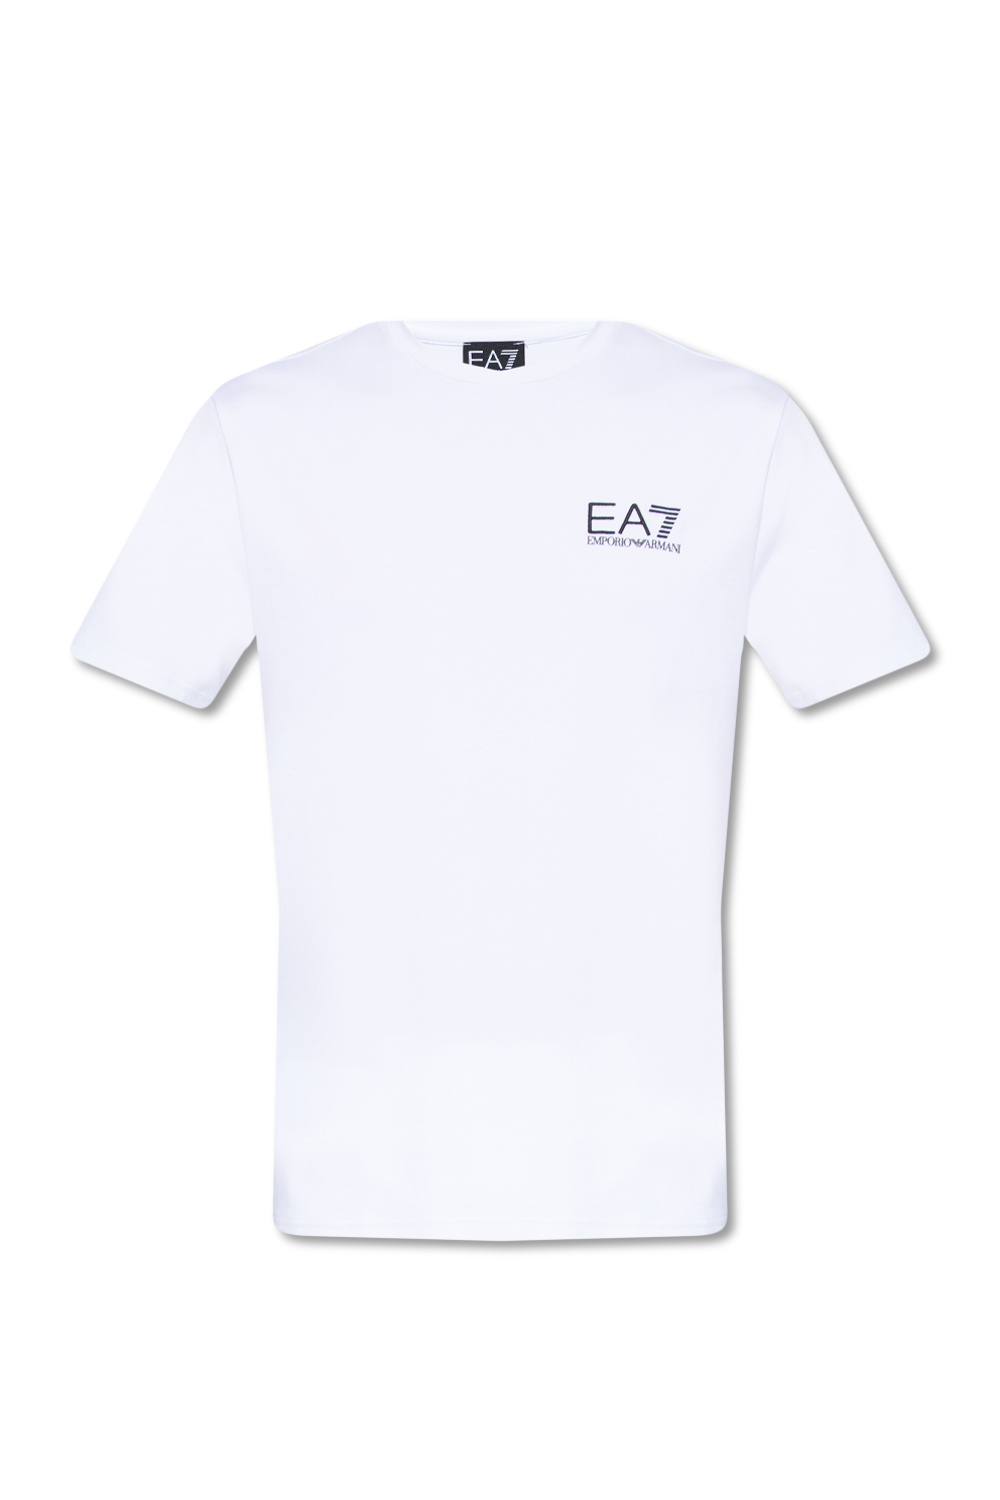 Джинсовая armani - shirt EA7 Emporio Armani - Logo T - IetpShops